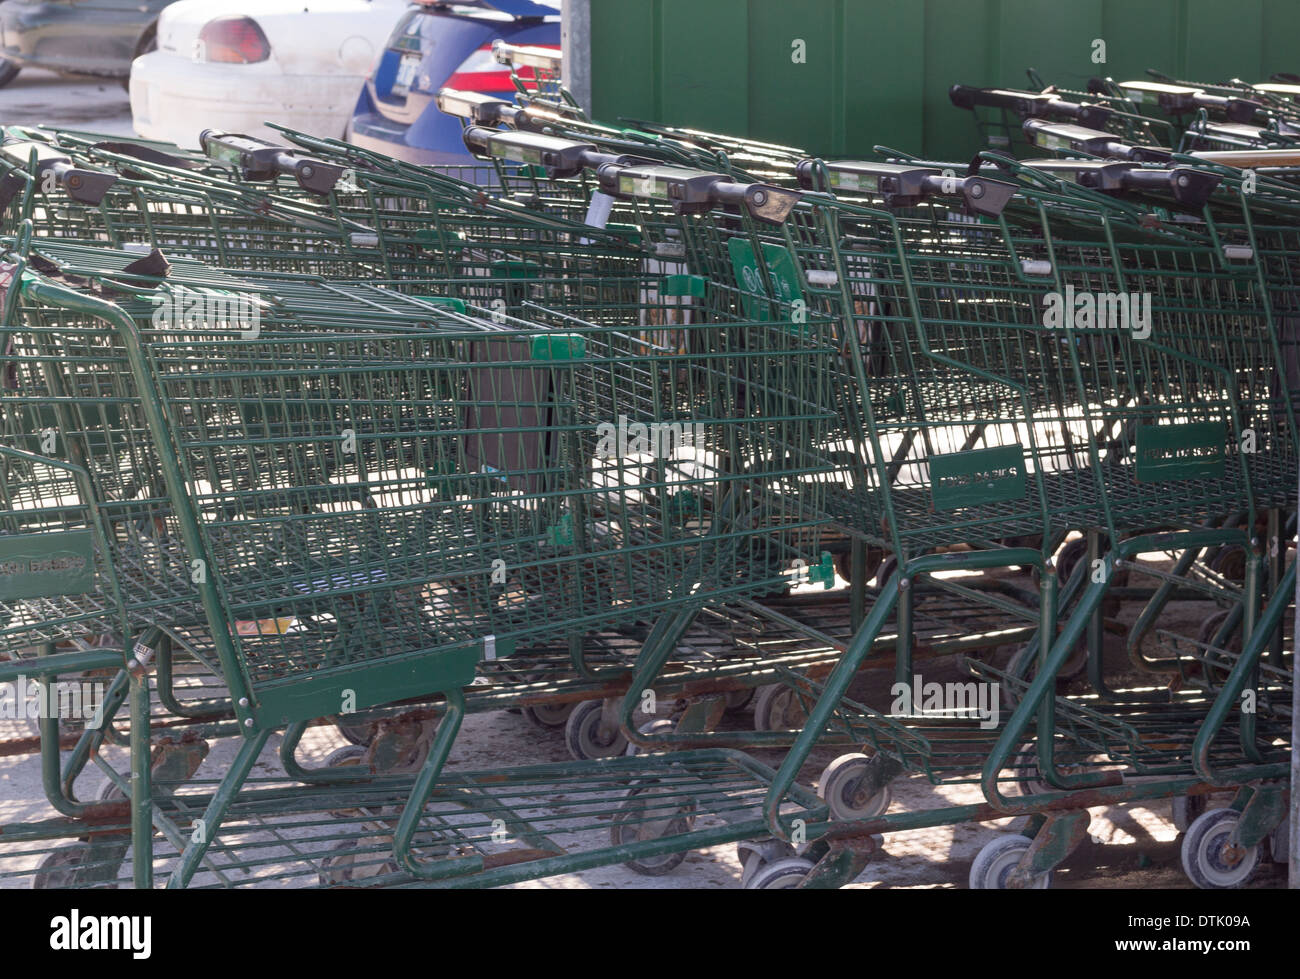 Shopping Carts at Food Basics grocery store Stock Photo